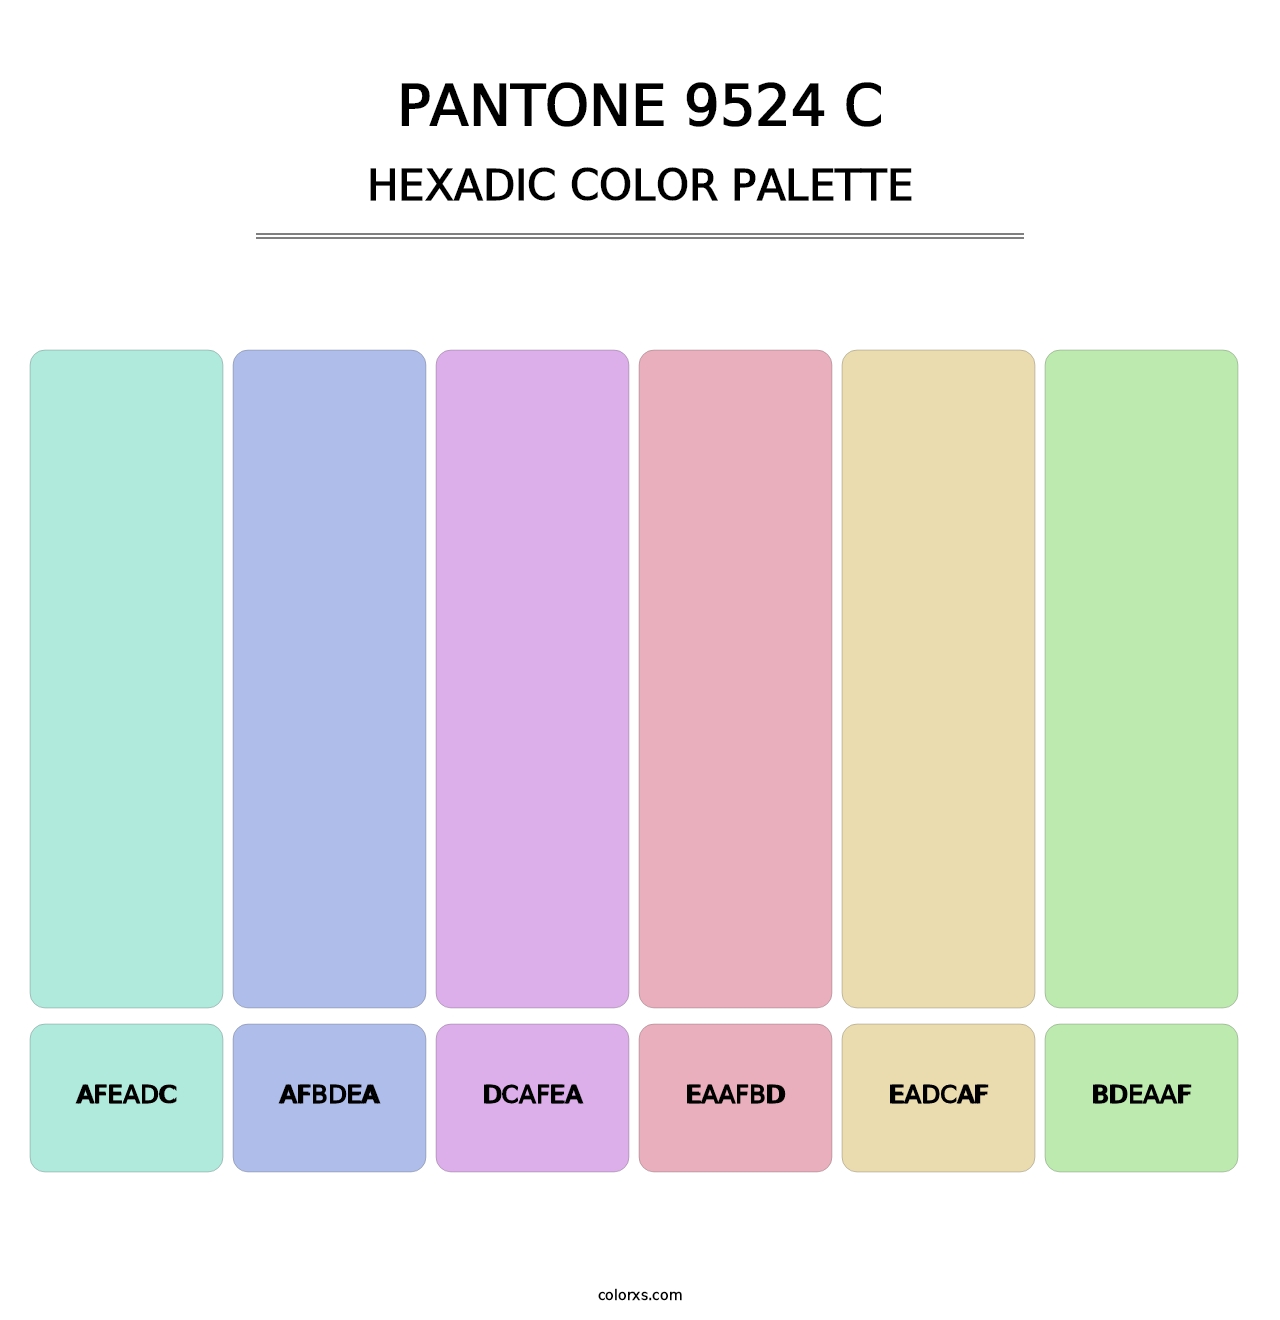 PANTONE 9524 C - Hexadic Color Palette